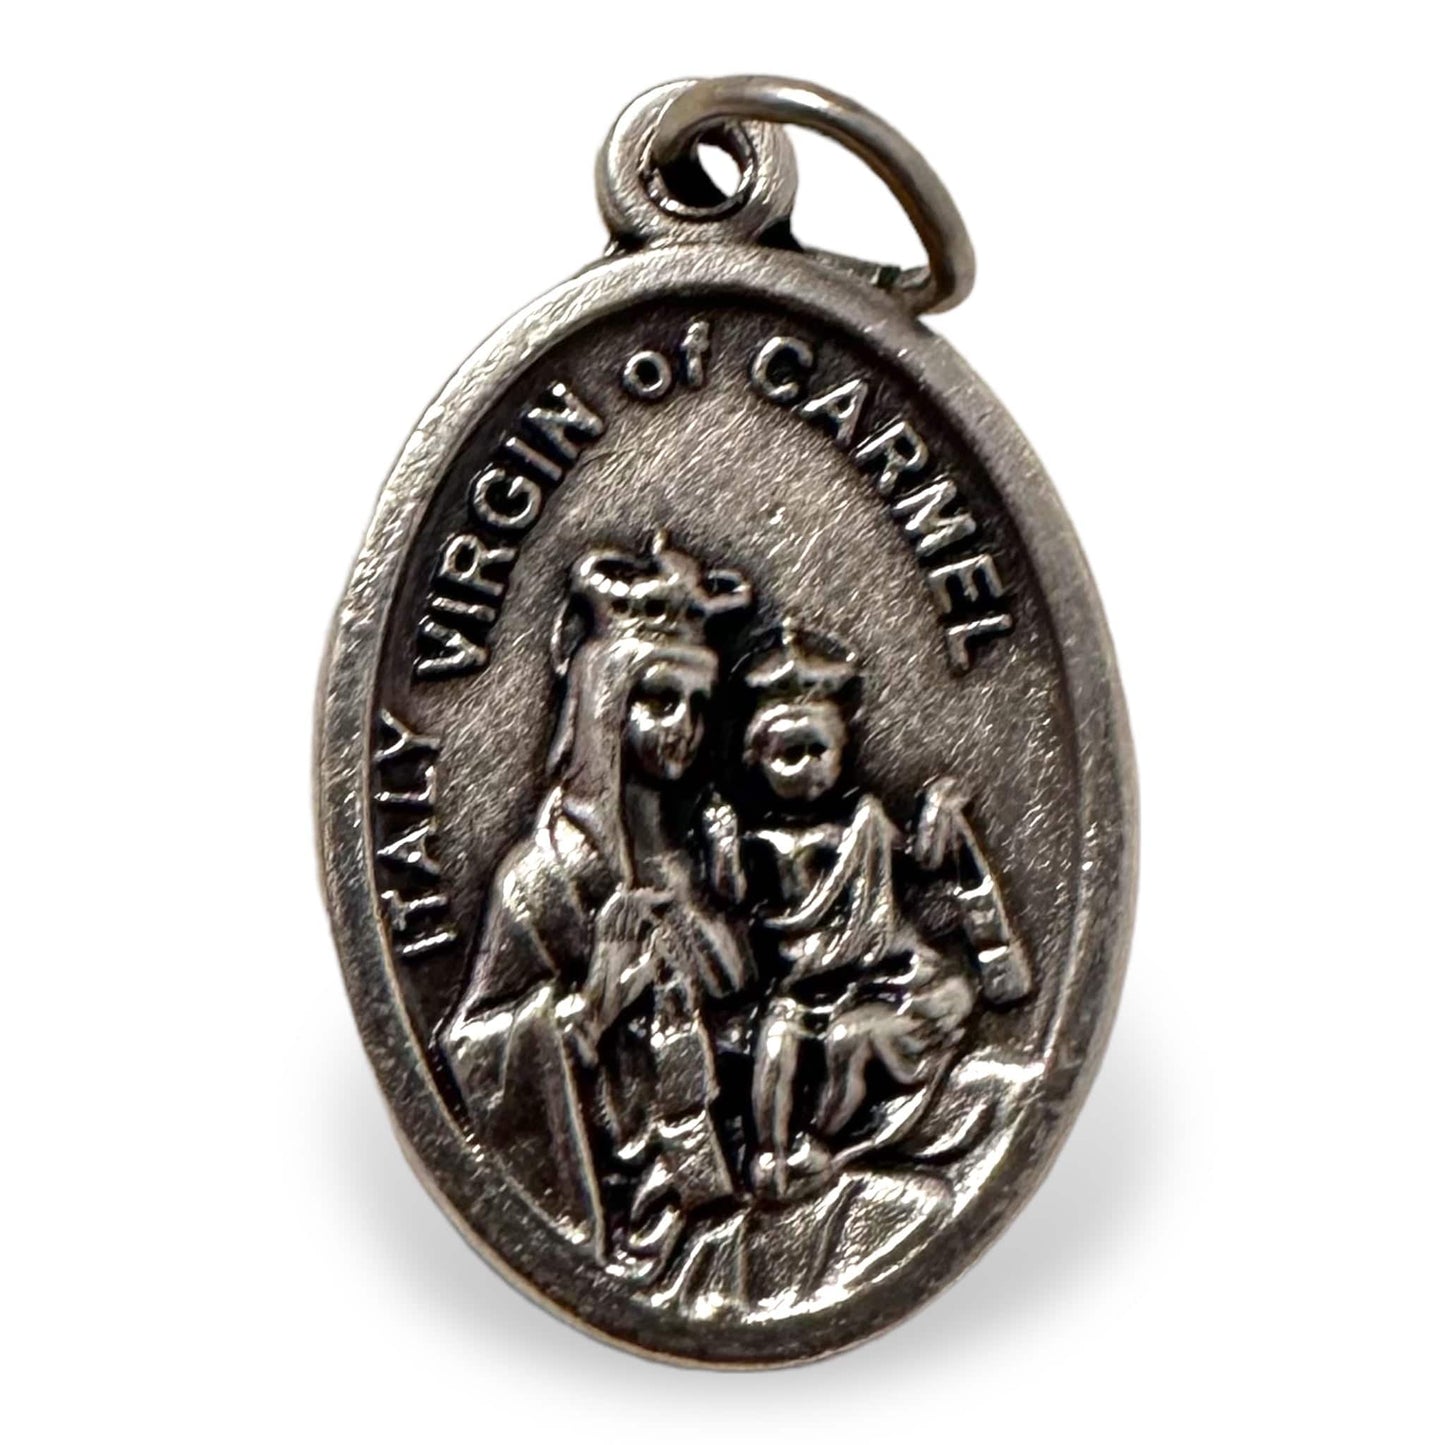 Catholically Medal Virgin of Carmel medal blessed by Pope